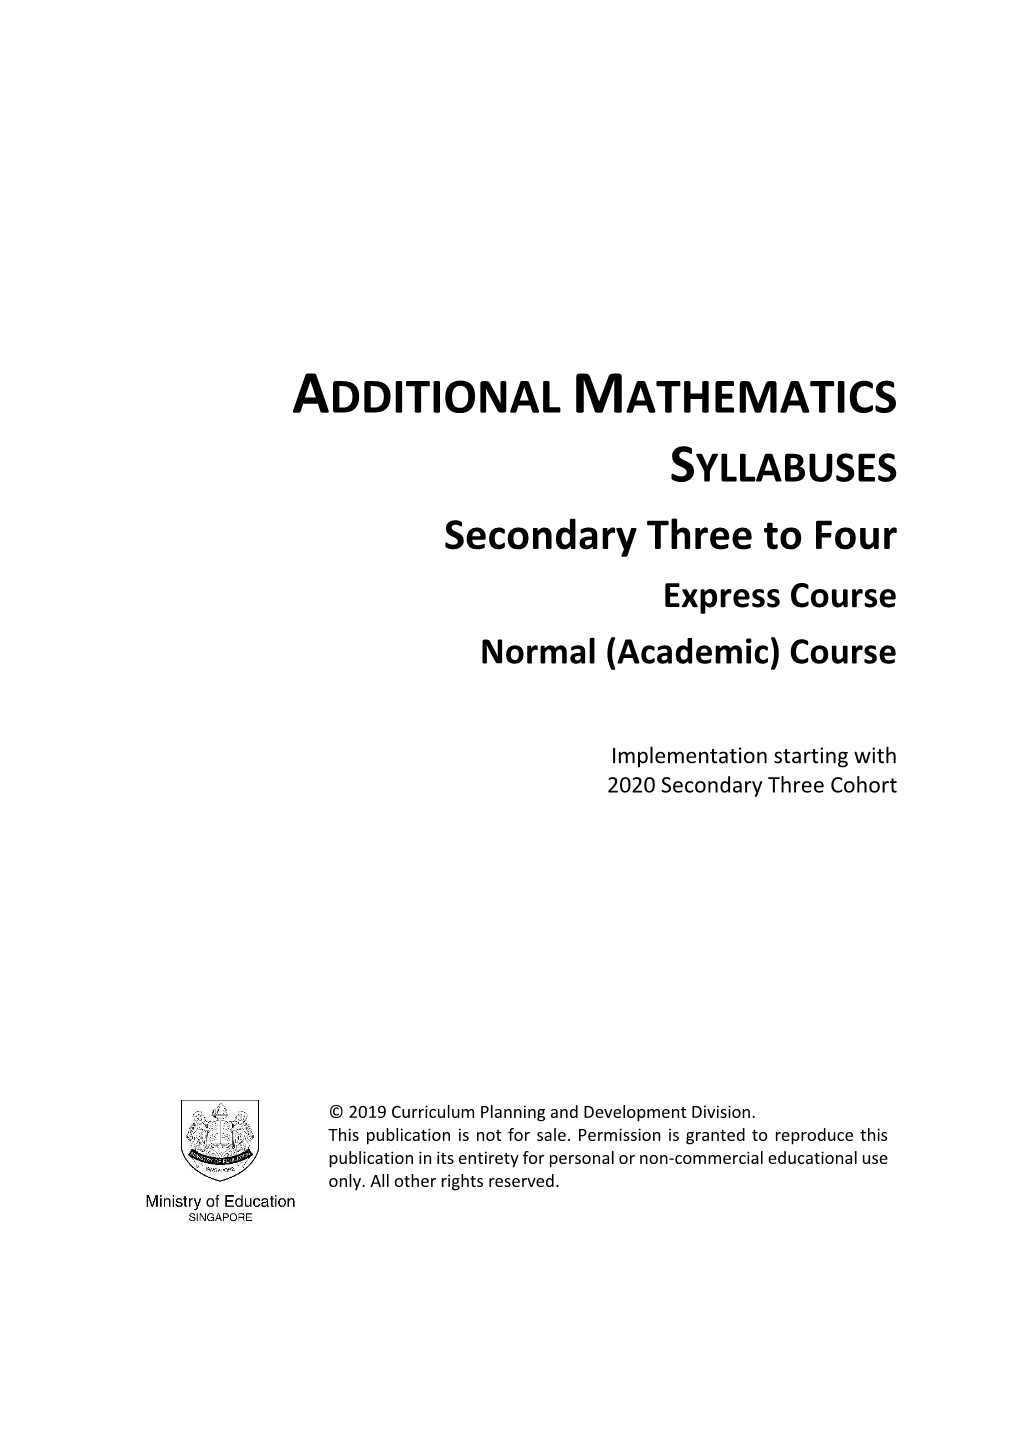 2020 Additional Mathematics